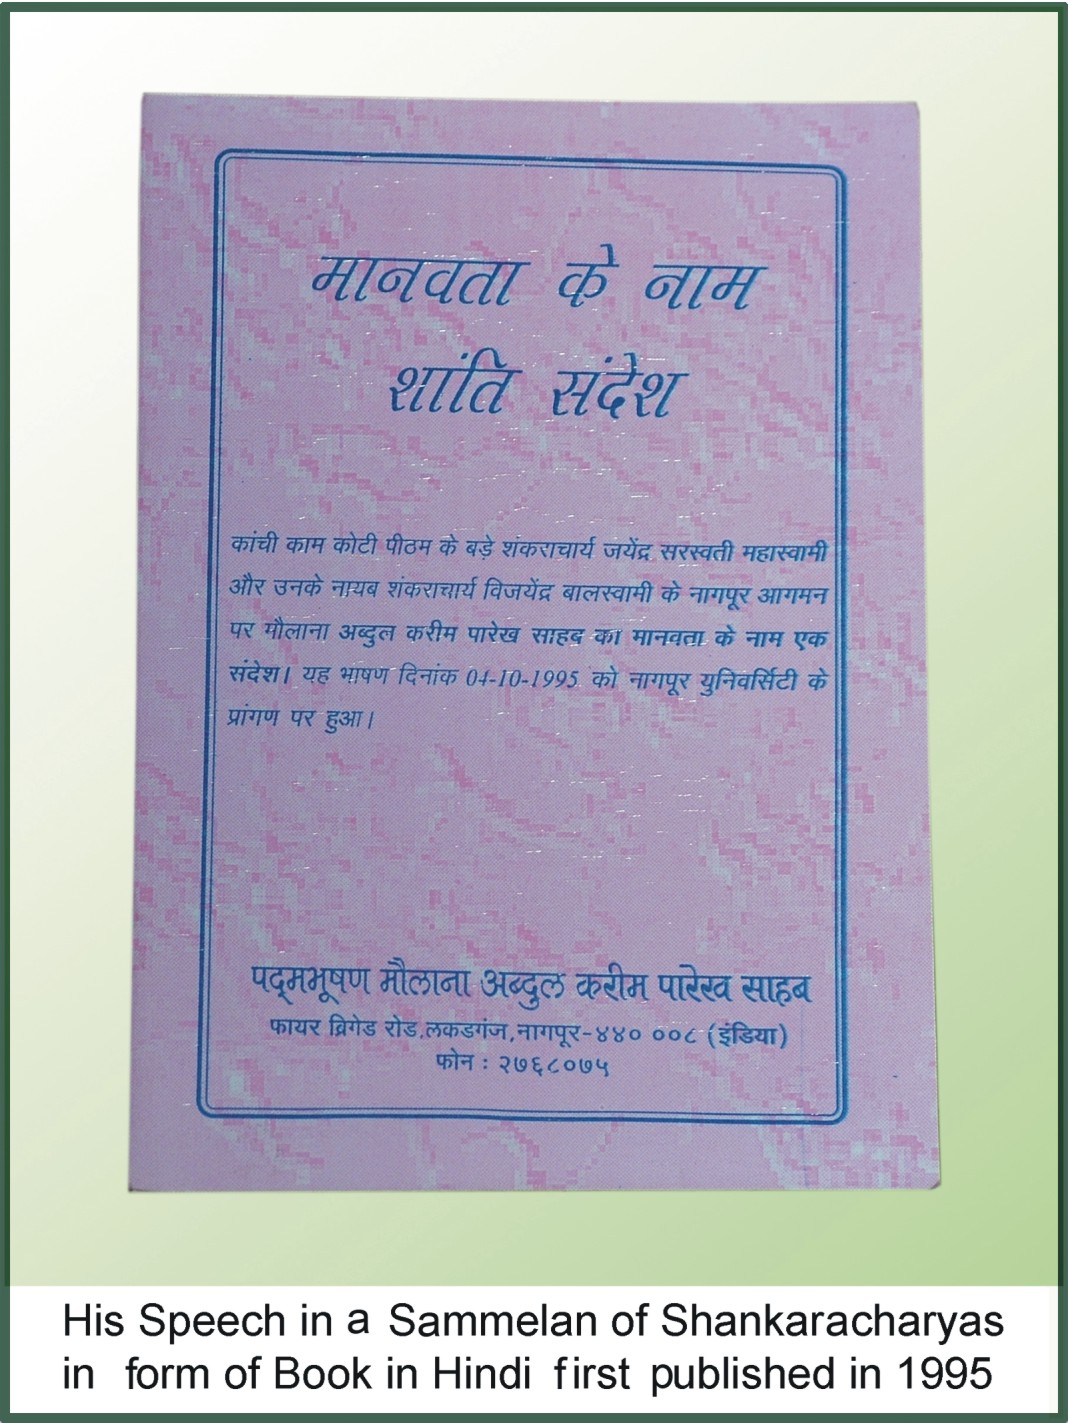 Sammelan of Shankaracharyas (Speech) (Hindi) First Published in 1995